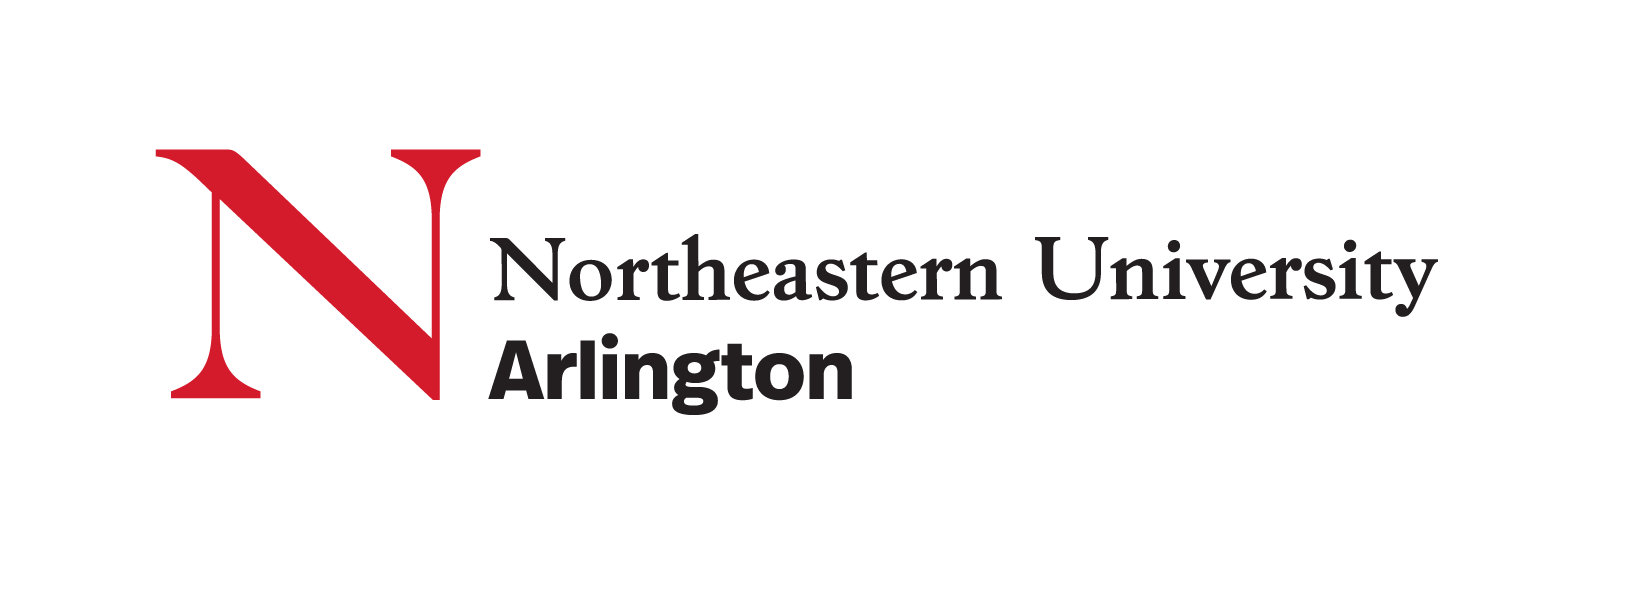 Northeastern University - Arlington Logo